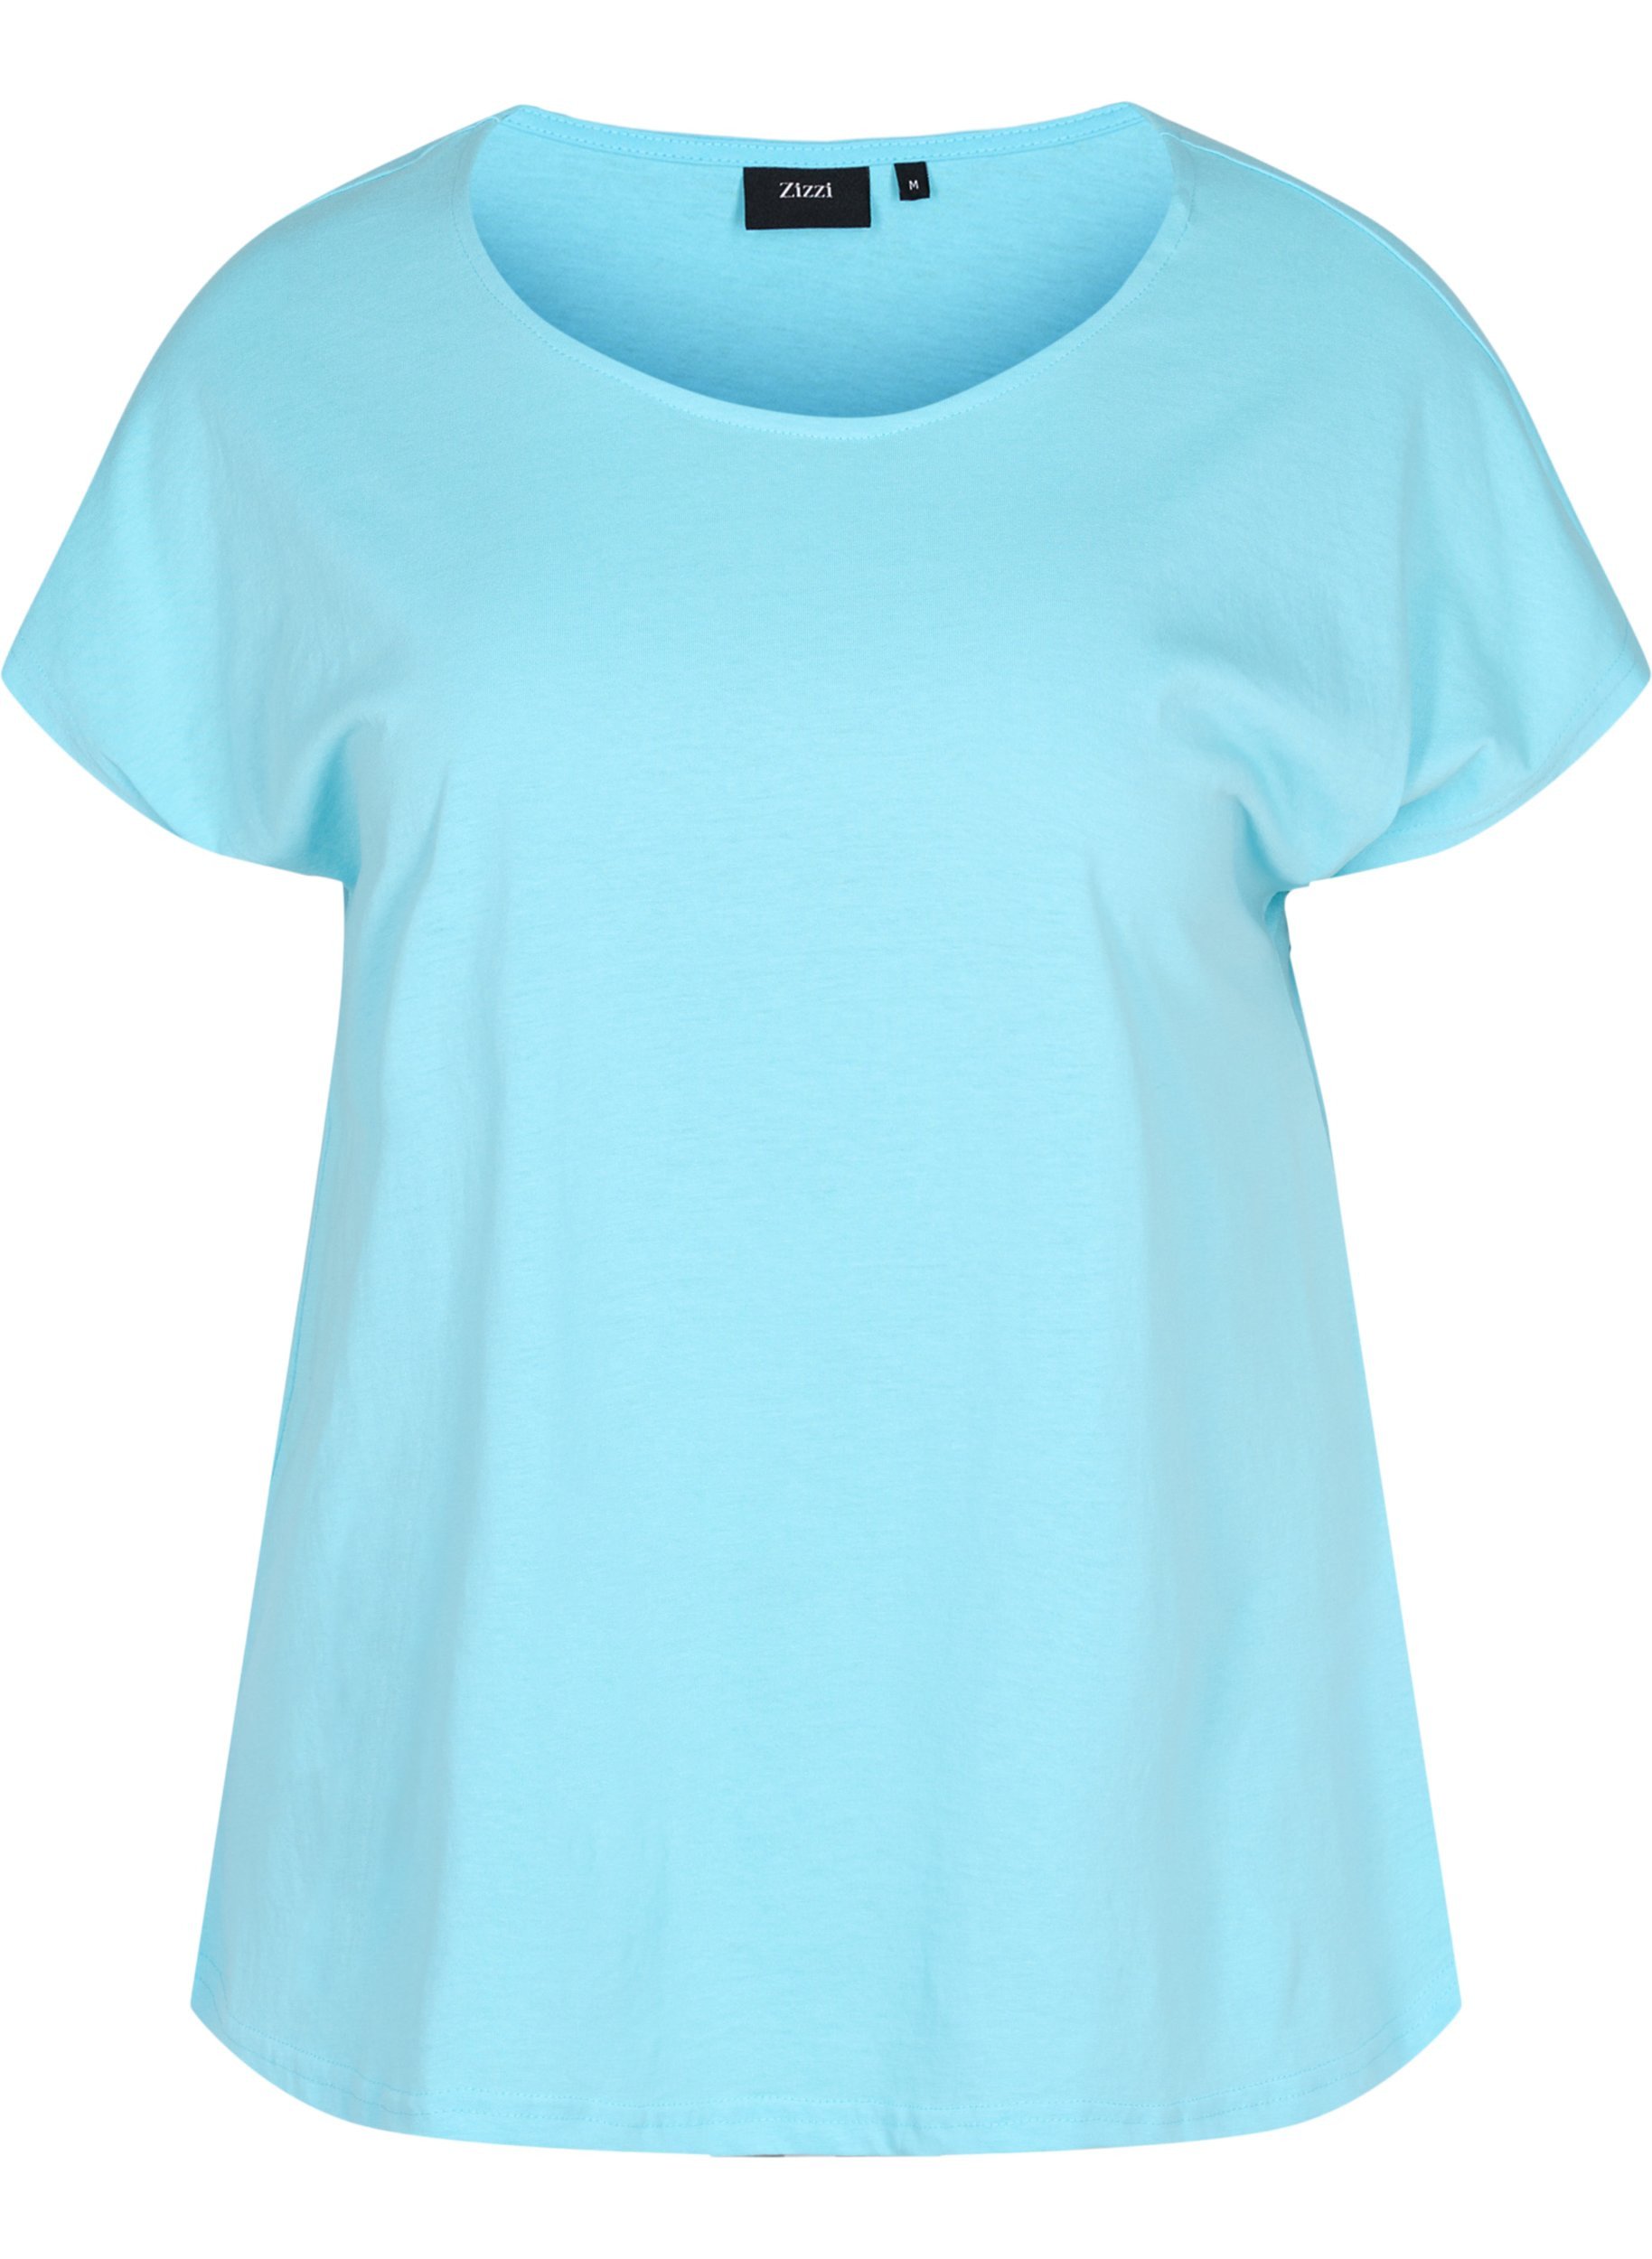 Cotton mix t-shirt, Blue Topaz